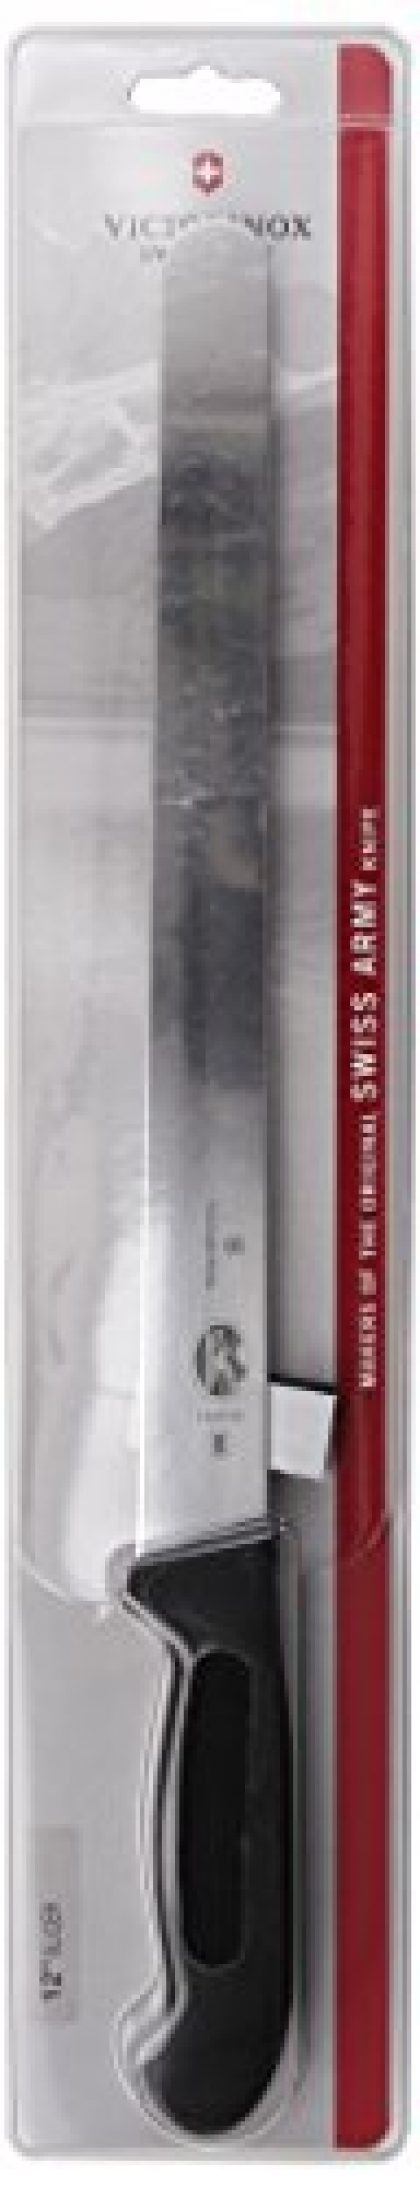 Victorinox Cutlery 12-Inch Slicing Knife, Black Fibrox Handle